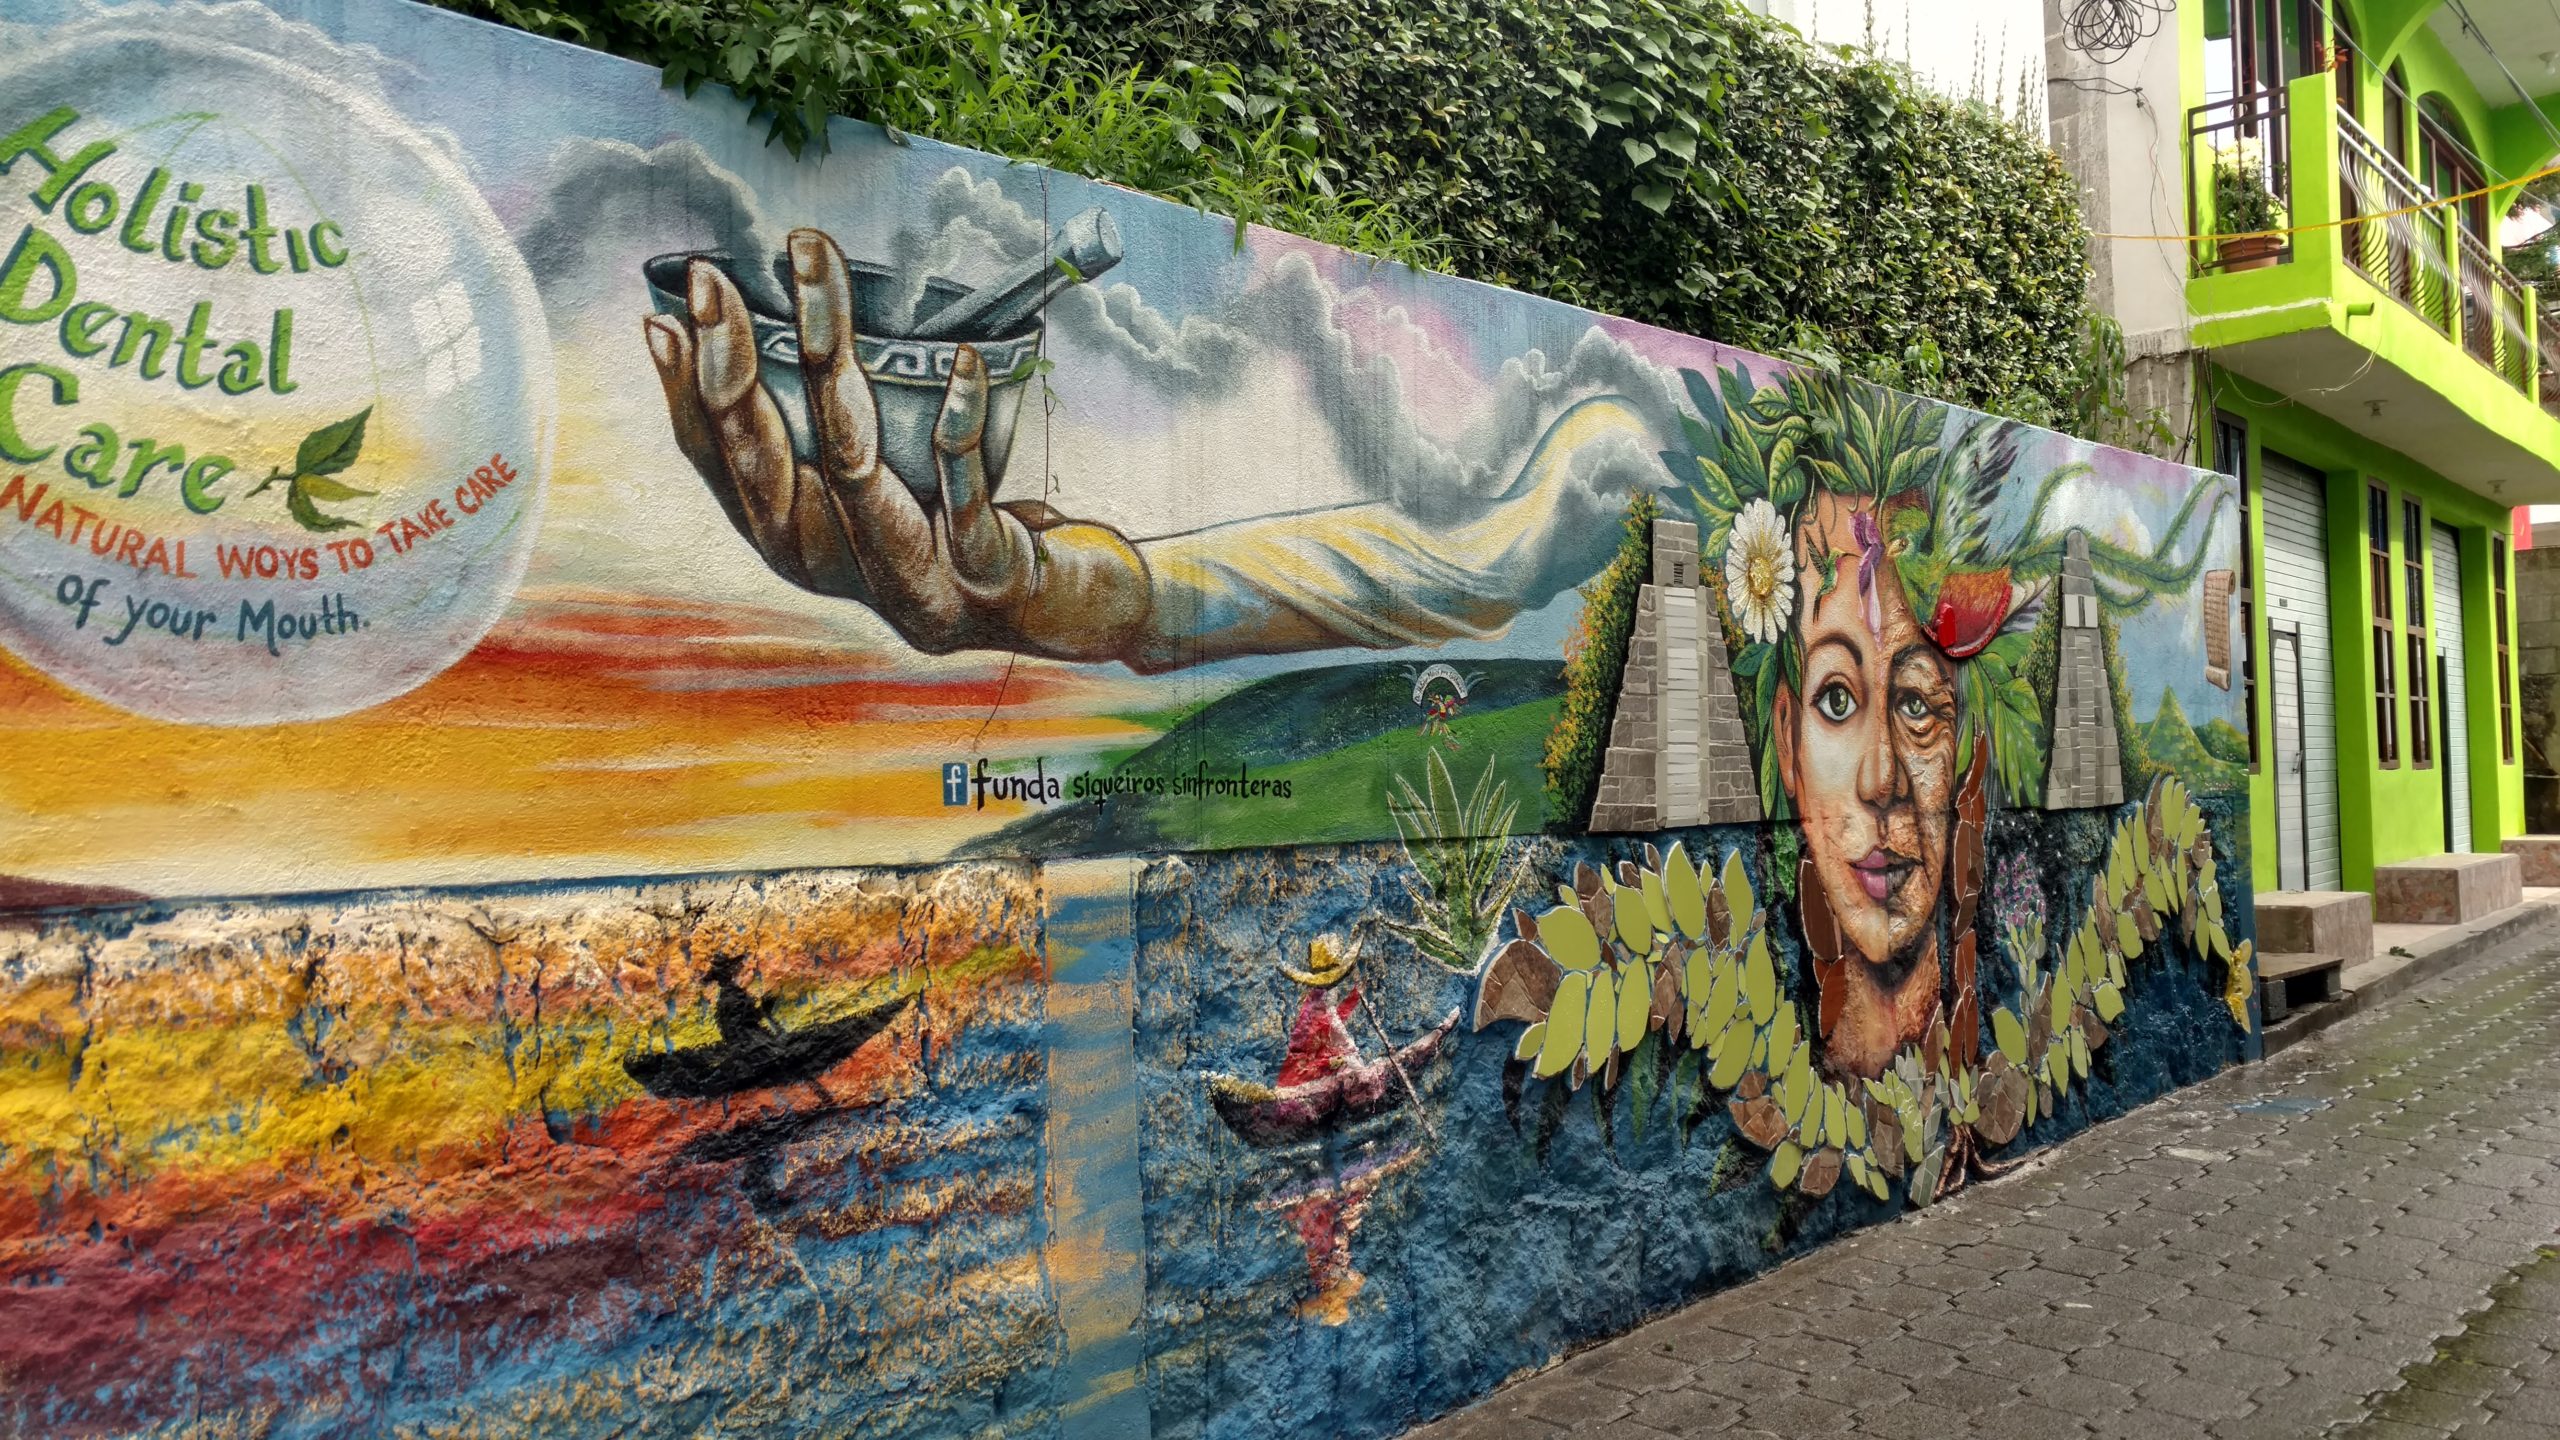 Wonderful mural work in Guatemala